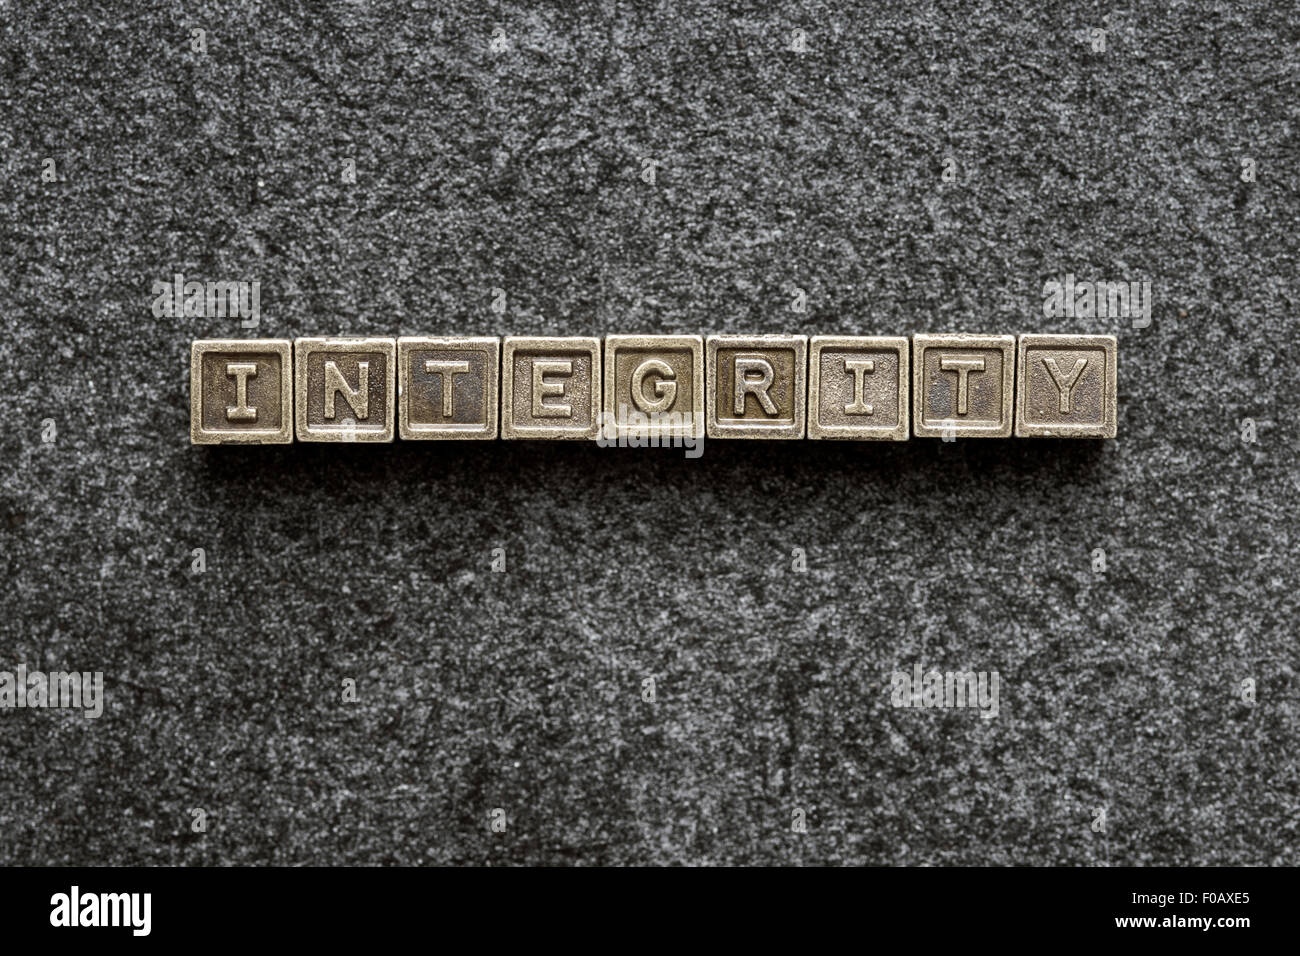 integrity word made from metallic blocks on blackboard surface Stock Photo